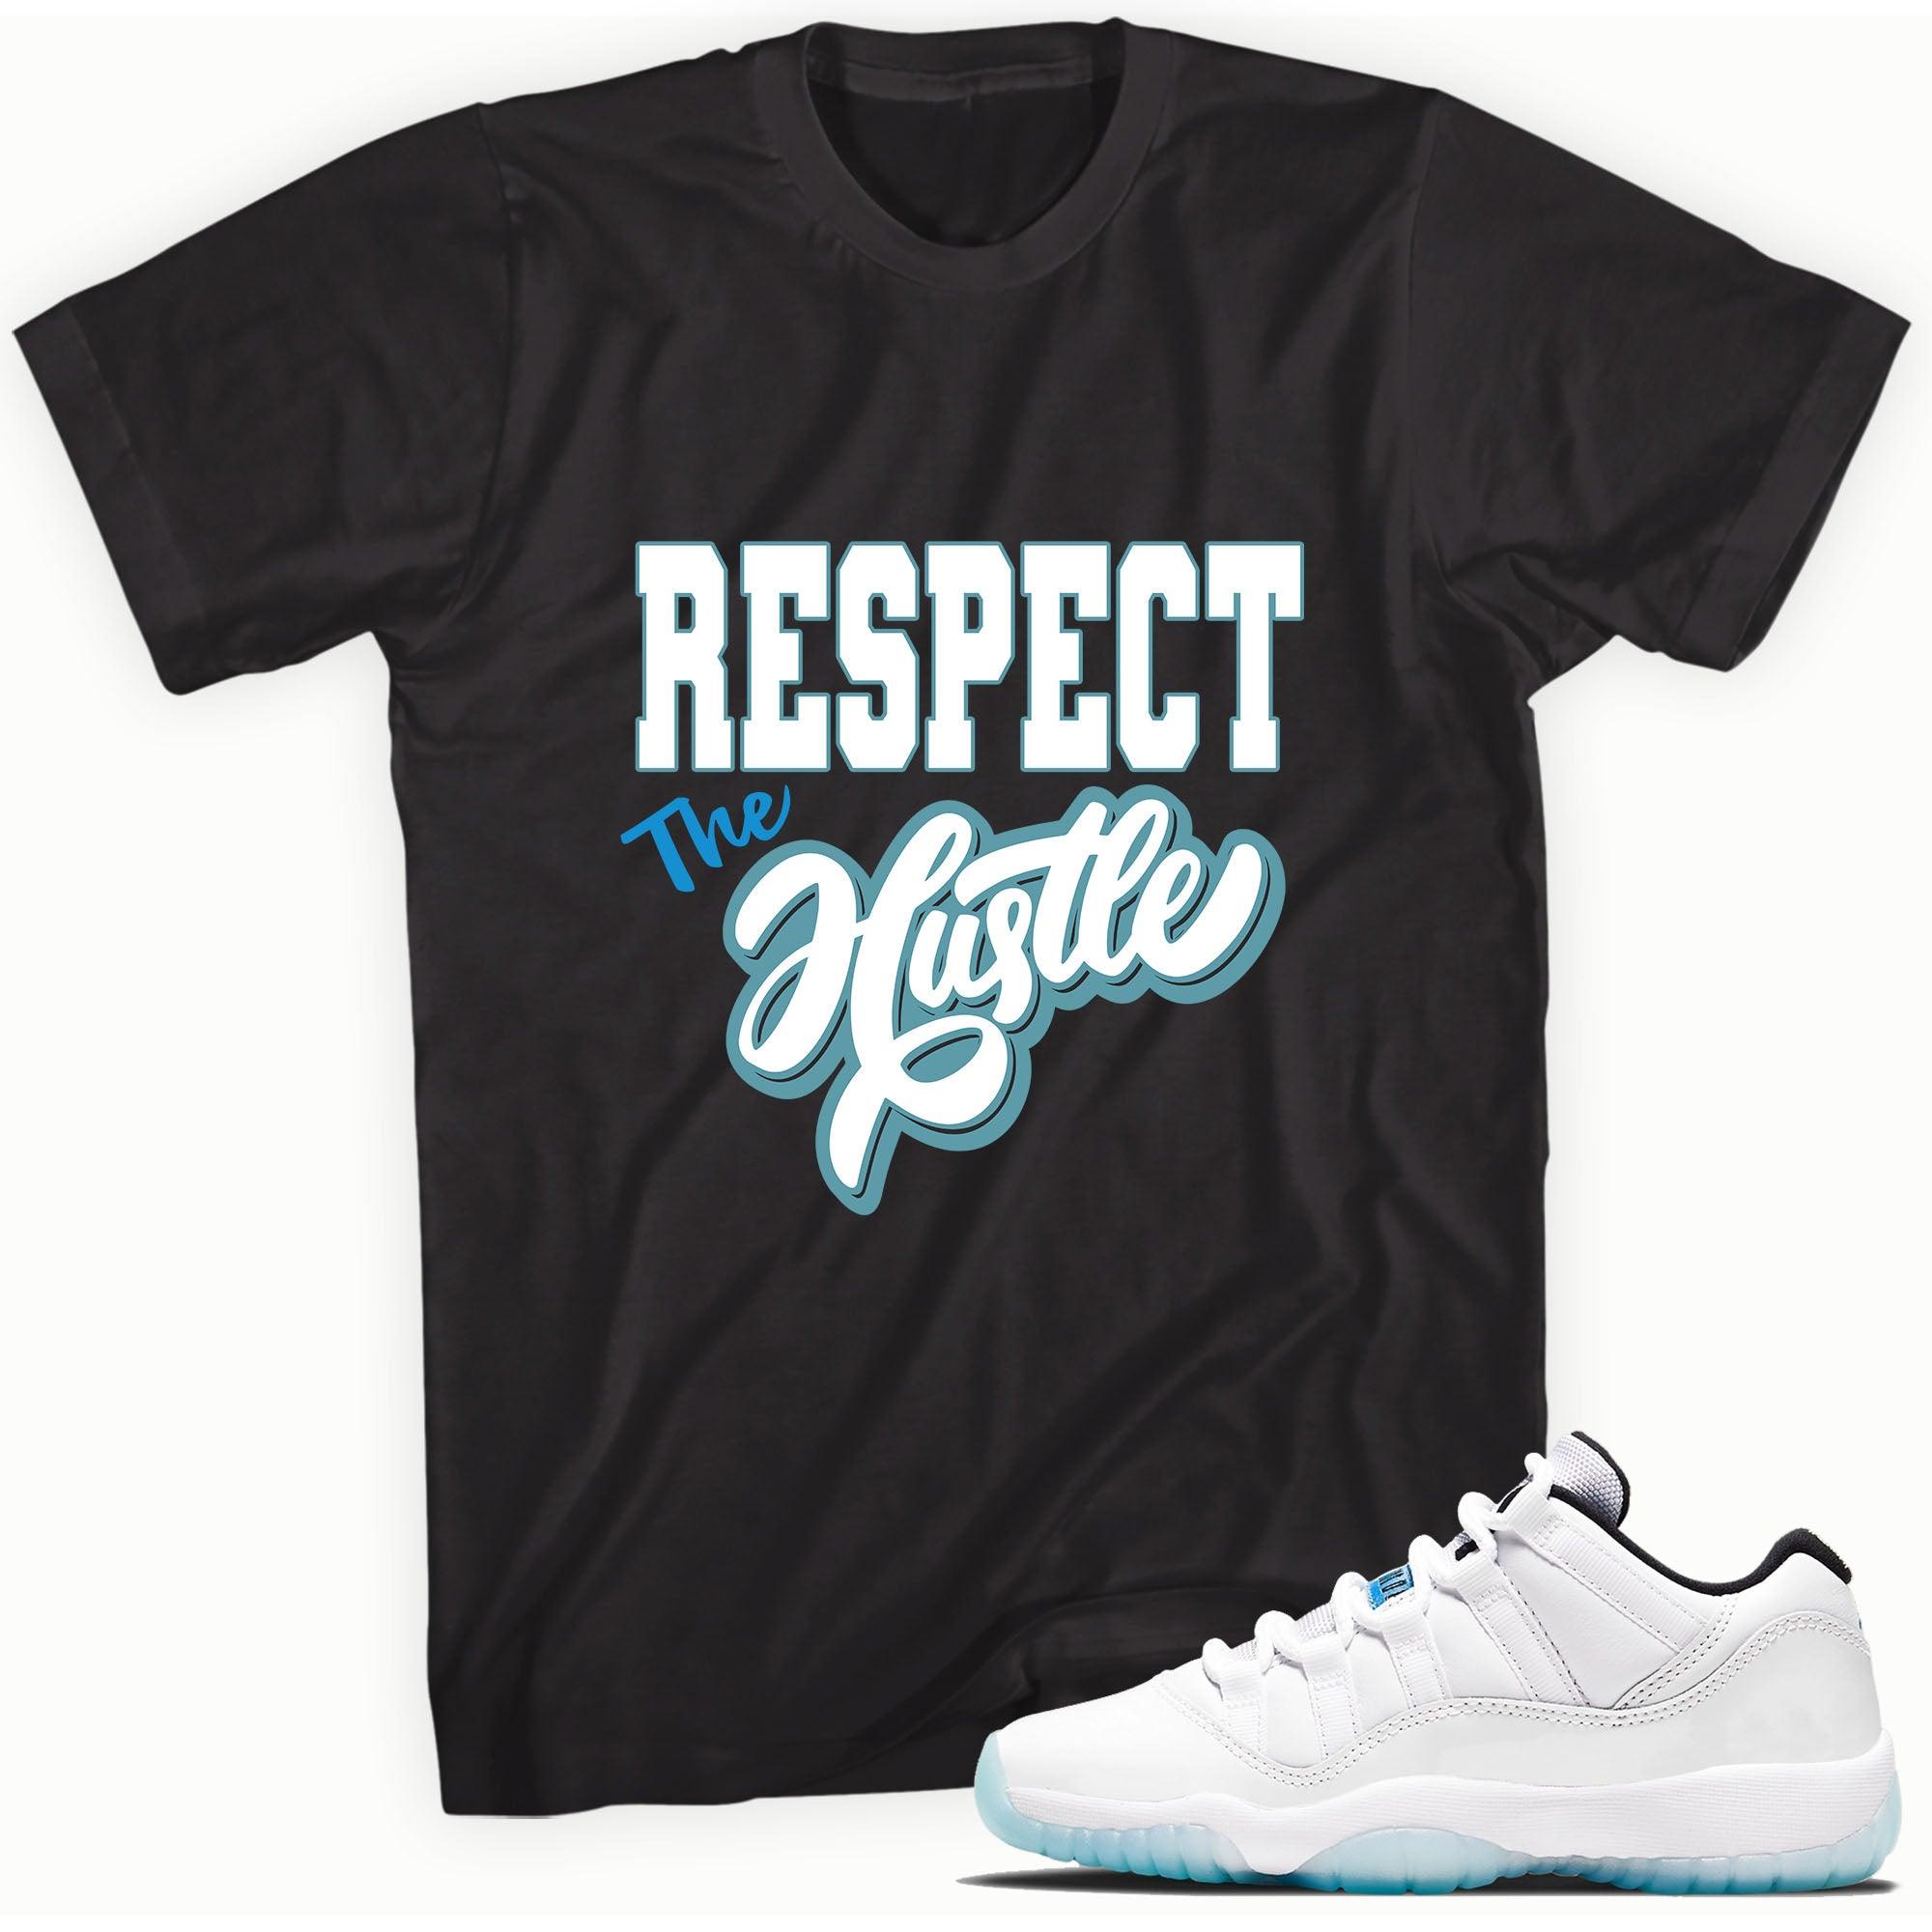 Black Respect the Hustle Shirt AJ 11s Retro Low Legend Blue photo